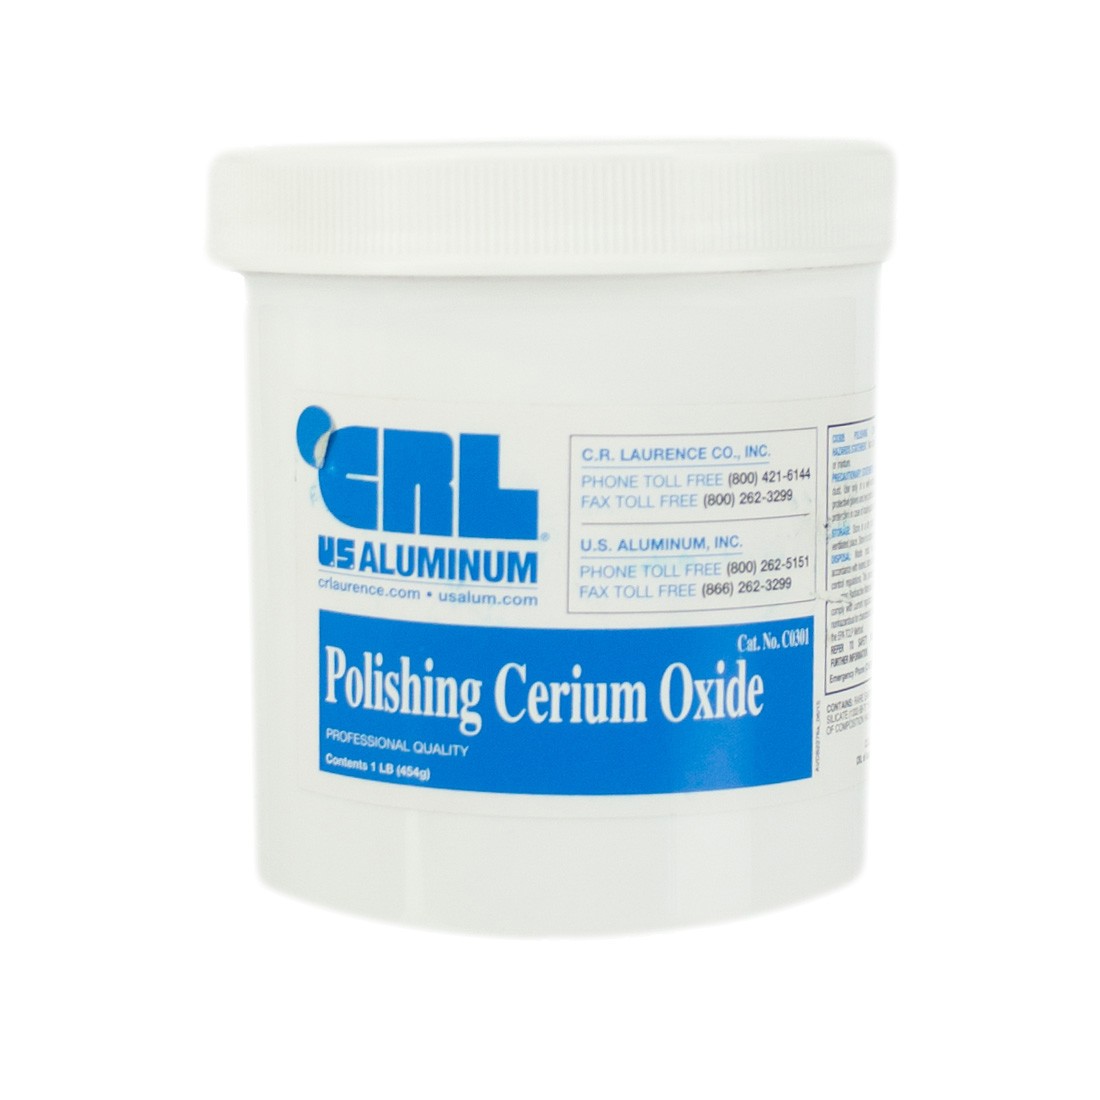 Cerium Oxide Buffing Compound - 8oz